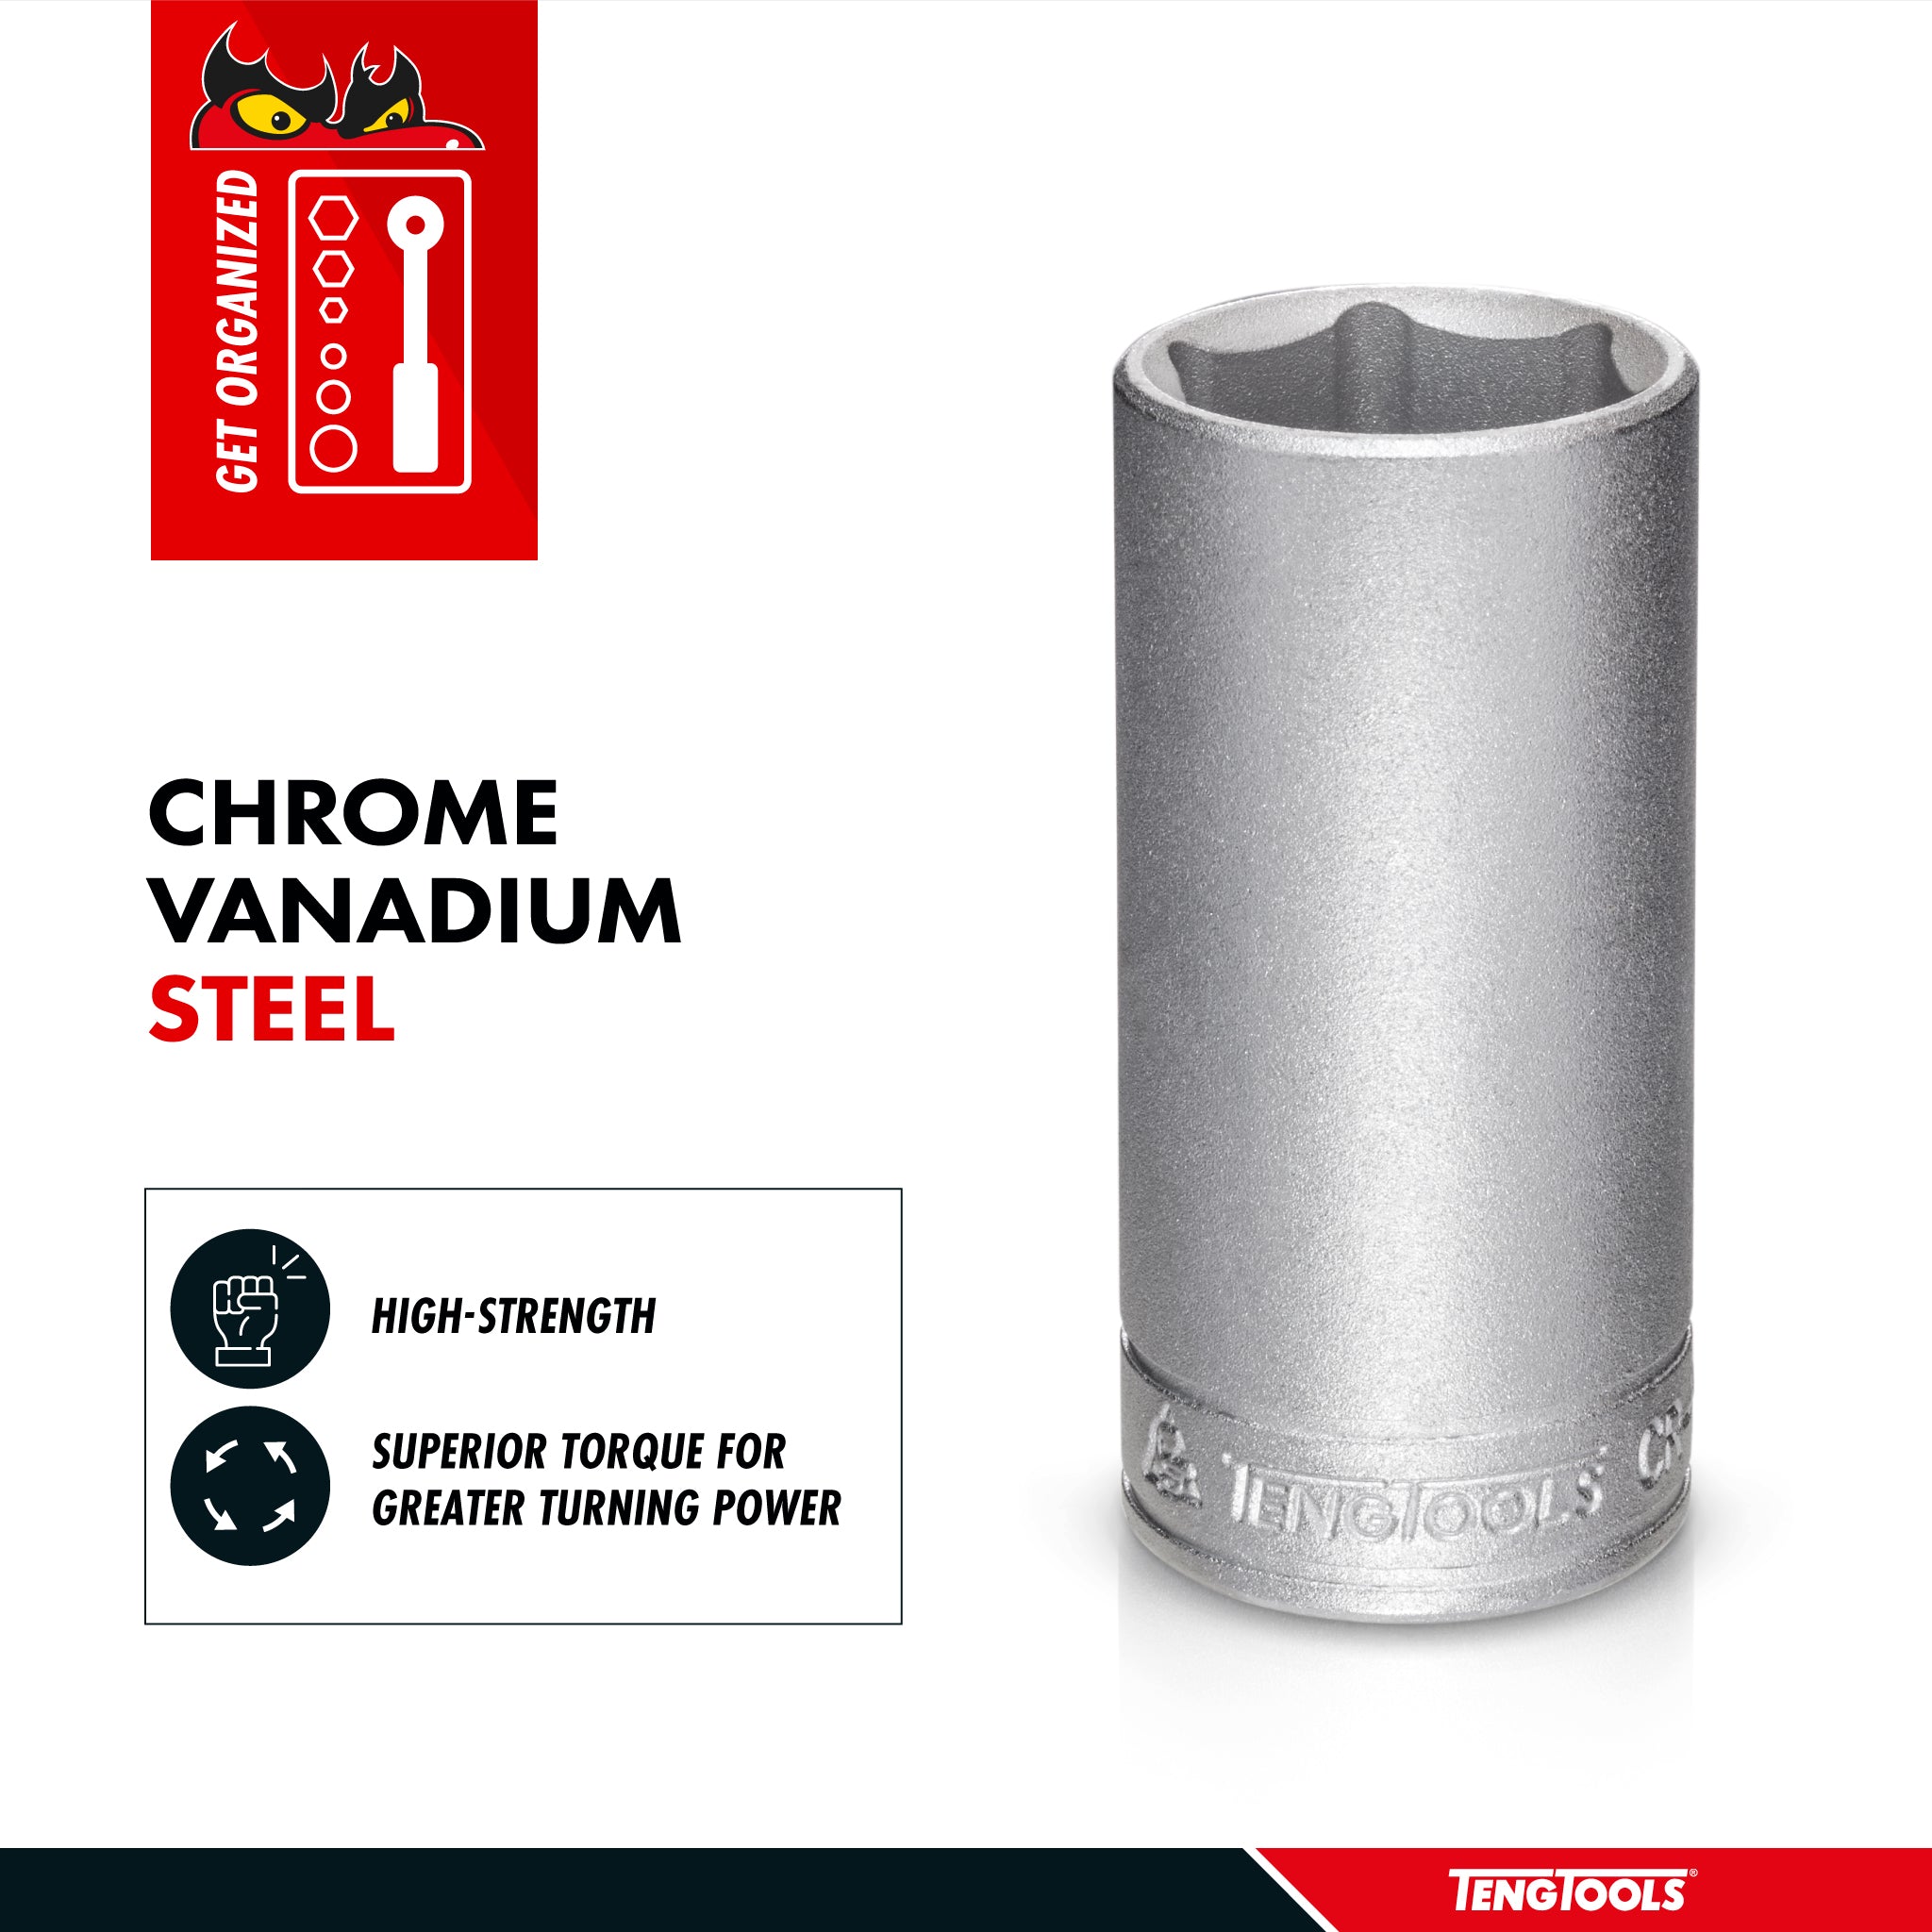 Teng Tools 1/4 Inch Drive 6 Point Metric Deep Chrome Vanadium Sockets - 5.5mm